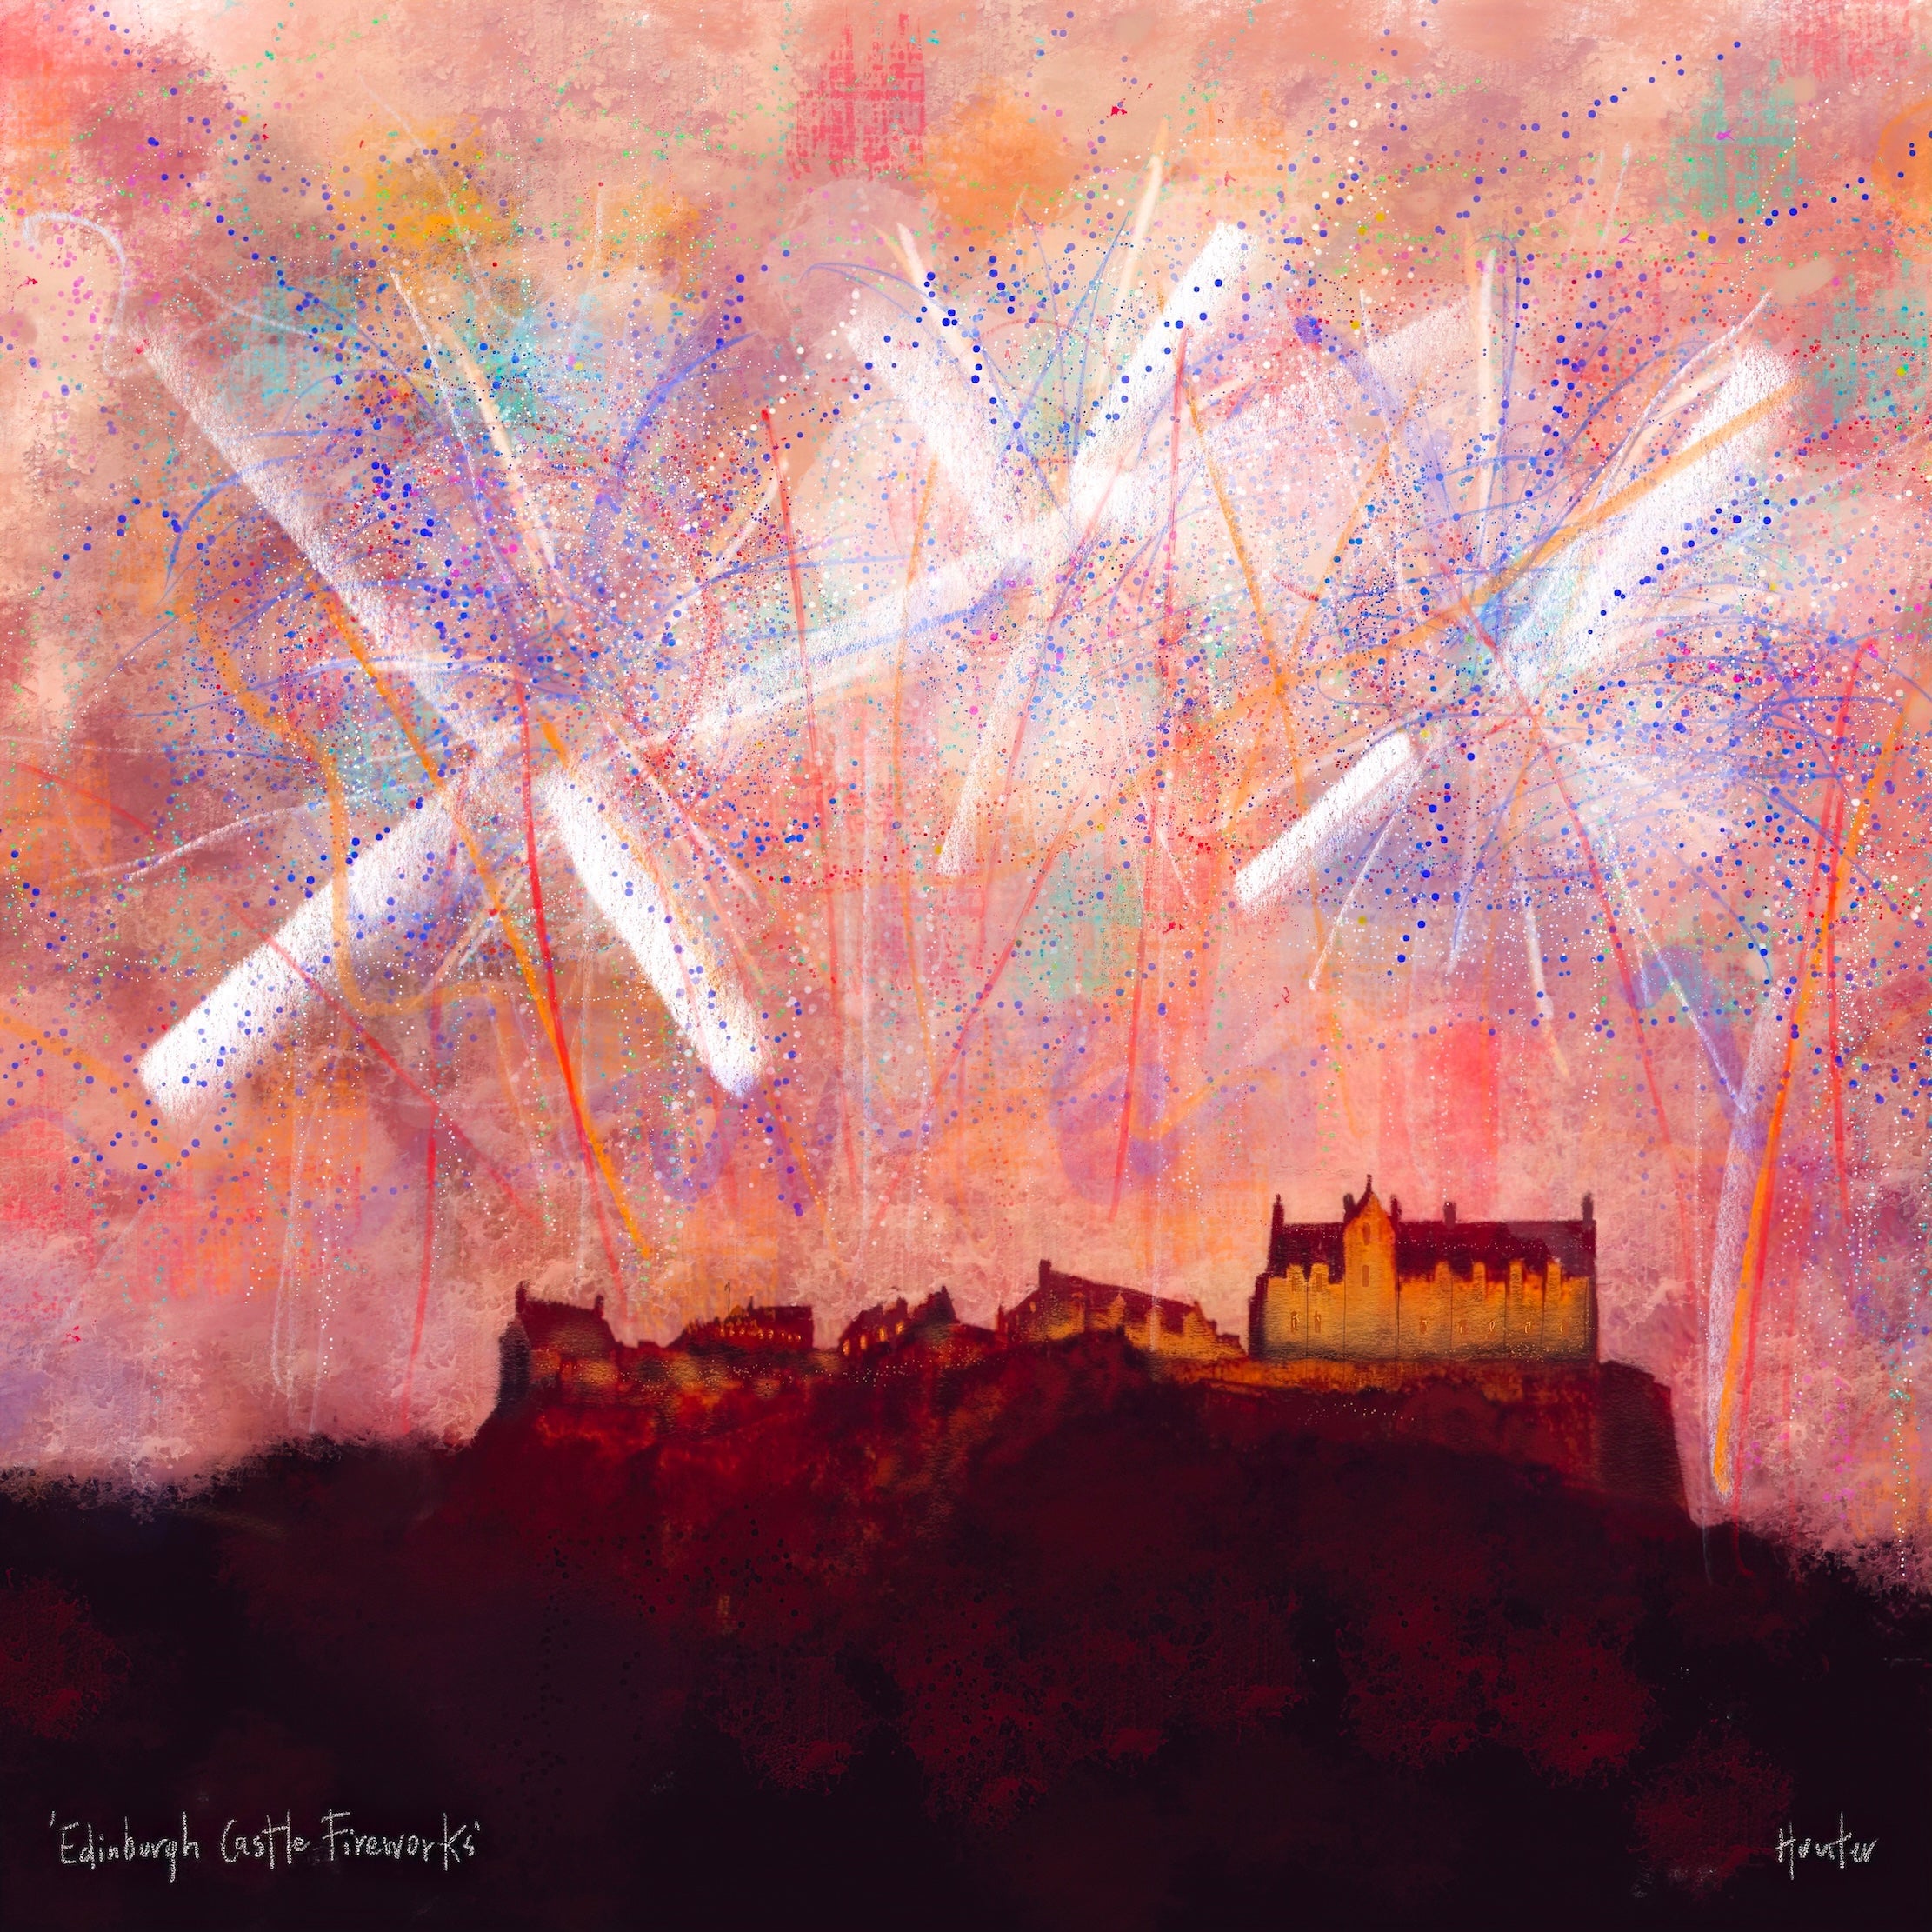 Edinburgh Castle Fireworks | Scotland In Your Pocket Art Print-Scotland In Your Pocket Framed Prints-Edinburgh & Glasgow Art Gallery-Paintings, Prints, Homeware, Art Gifts From Scotland By Scottish Artist Kevin Hunter